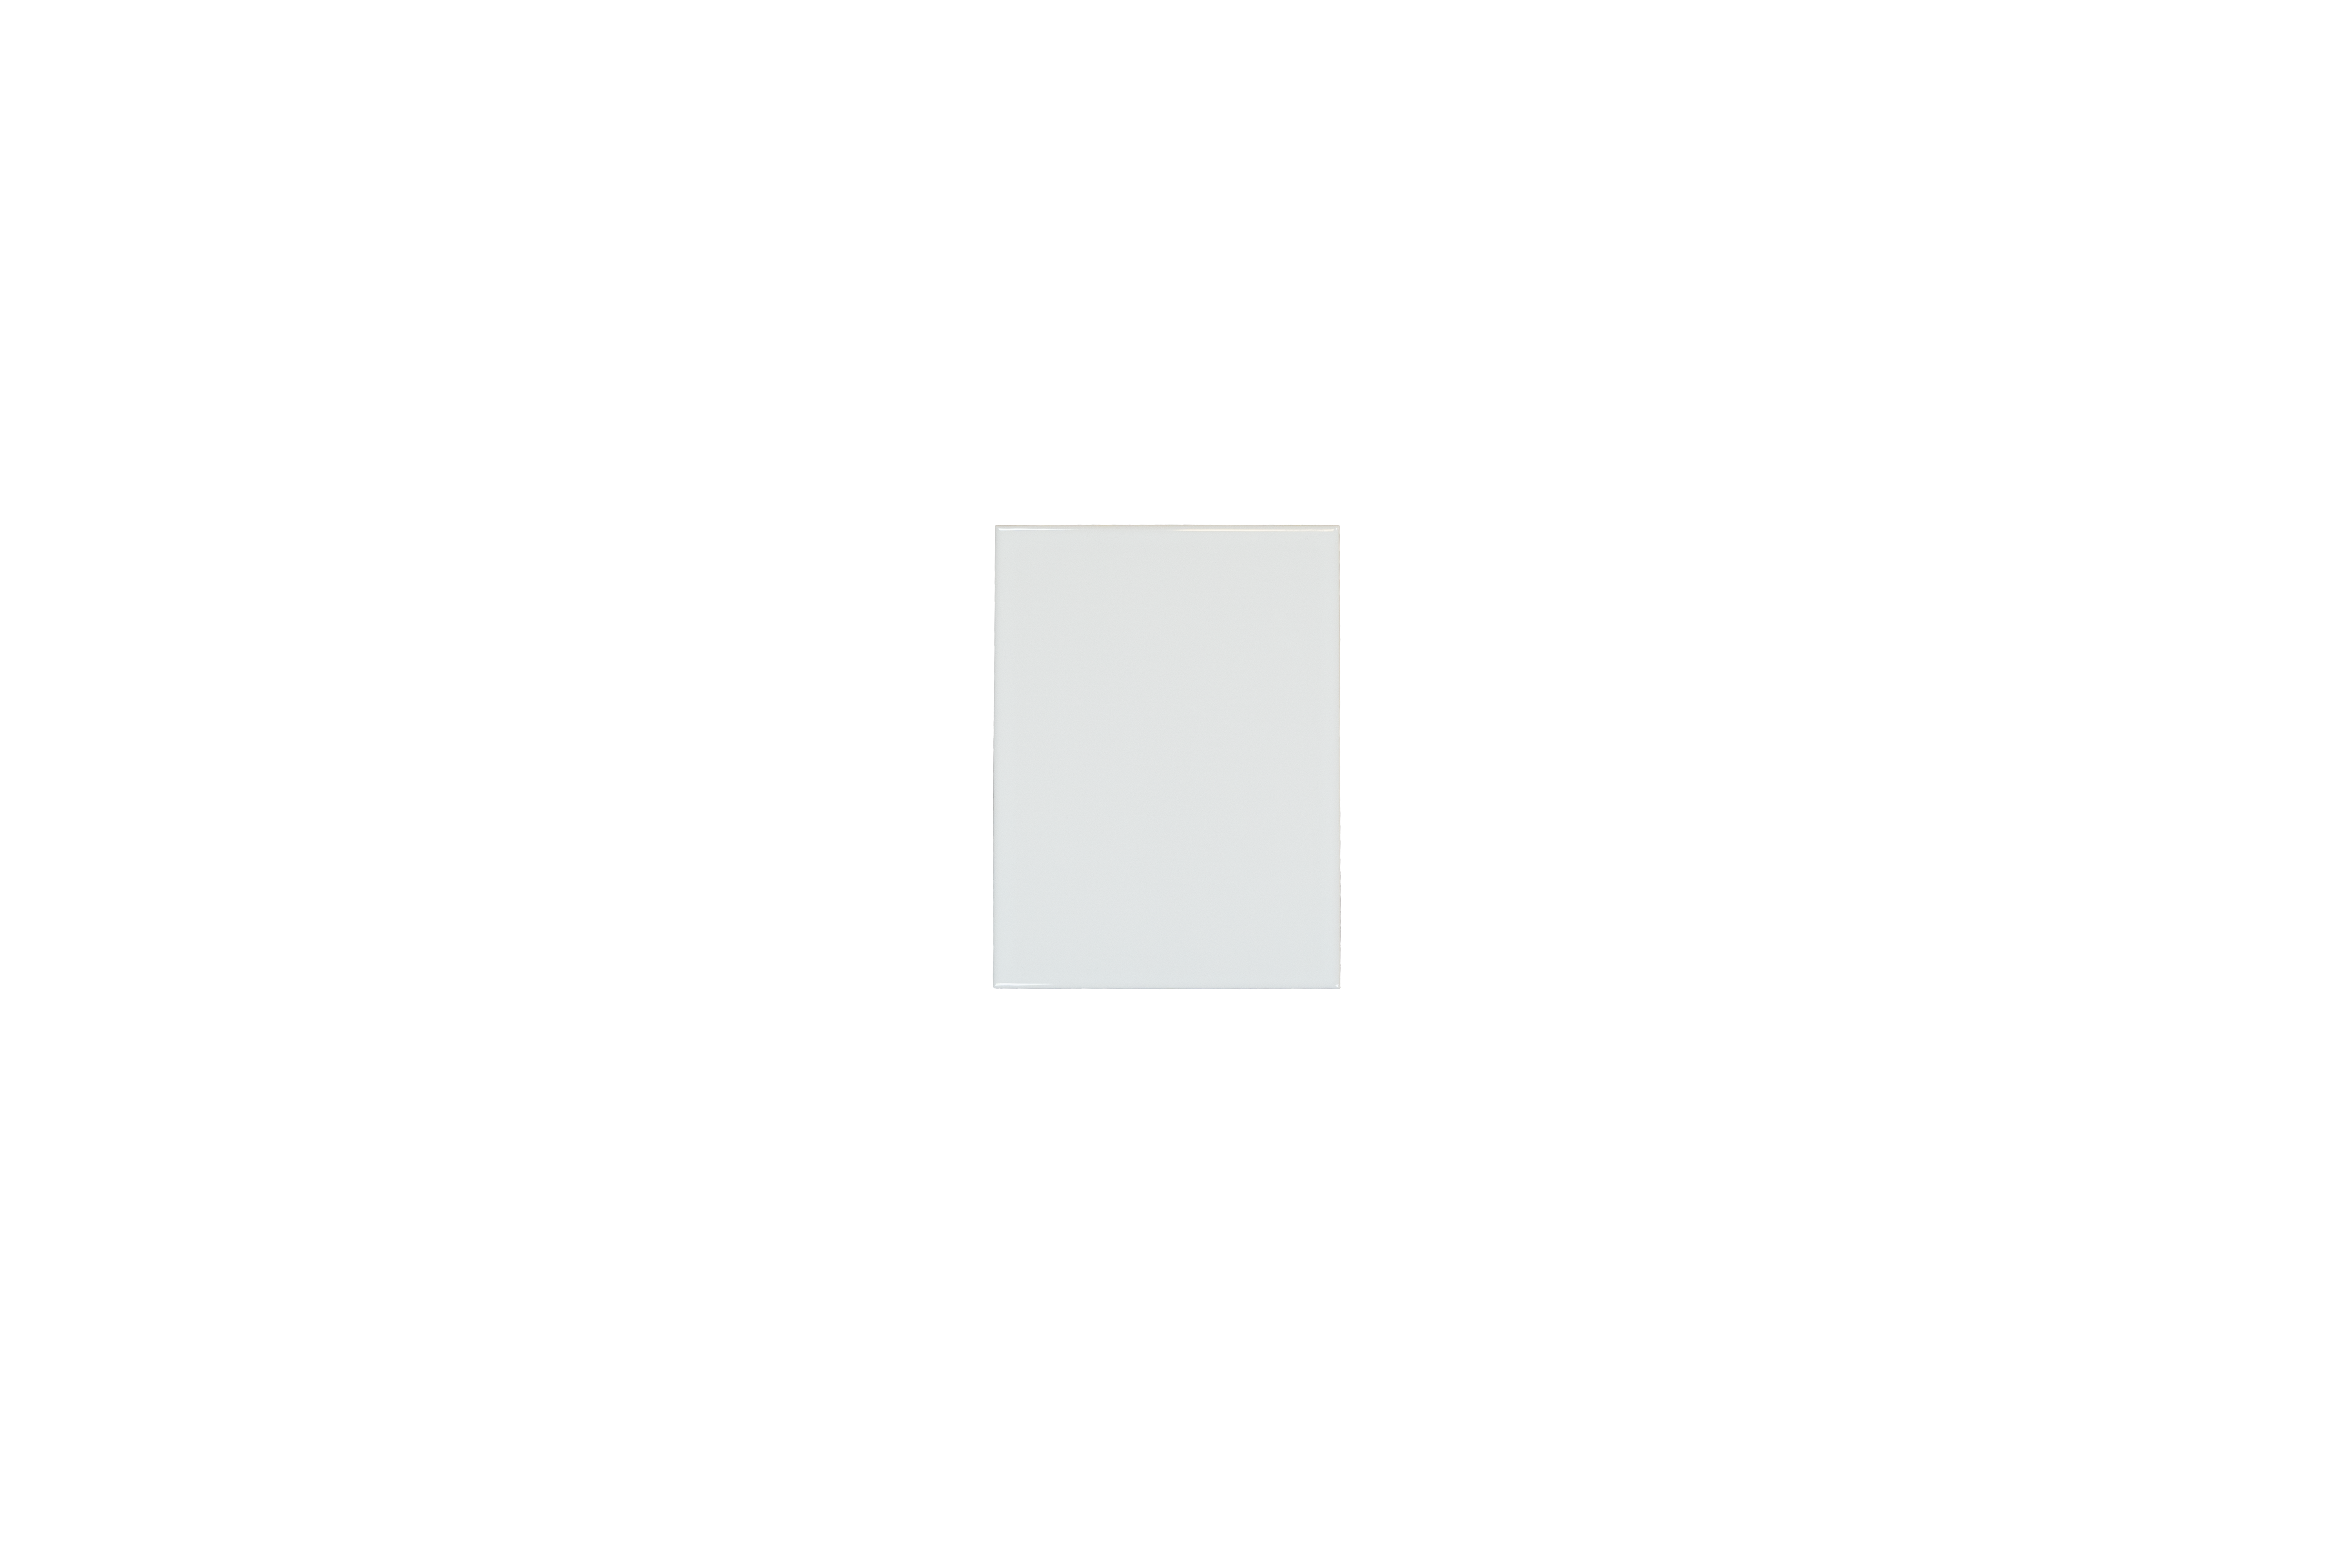 Urbanixx Gres Warschau Wandfliese uni Weiß glänzend 14,8x19,8 cm  